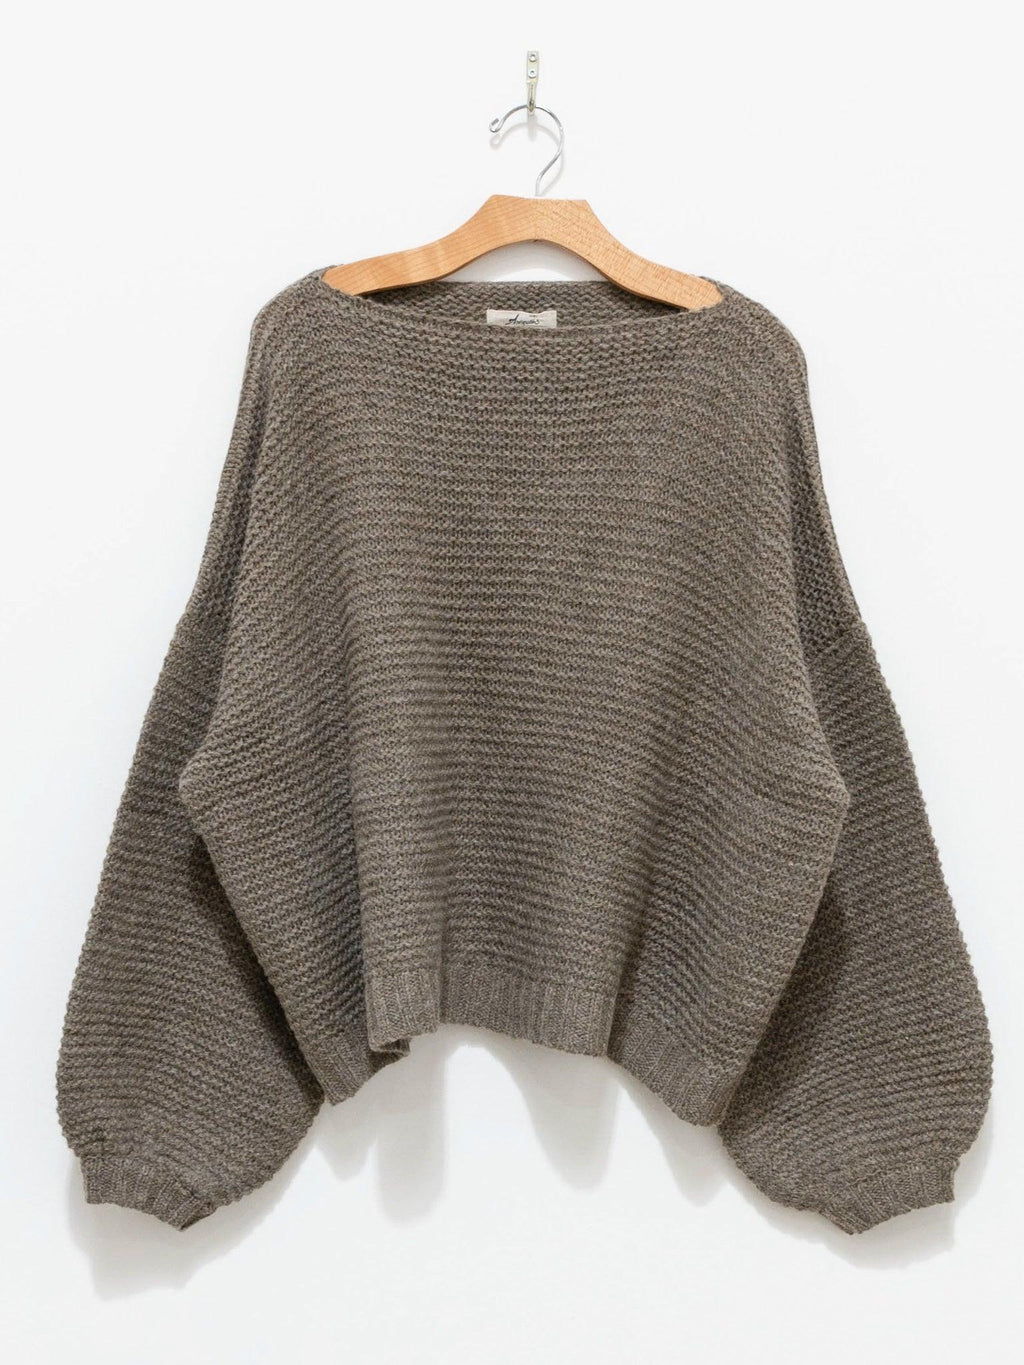 Namu Shop - Ichi Antiquites Wool Pullover - Mocha